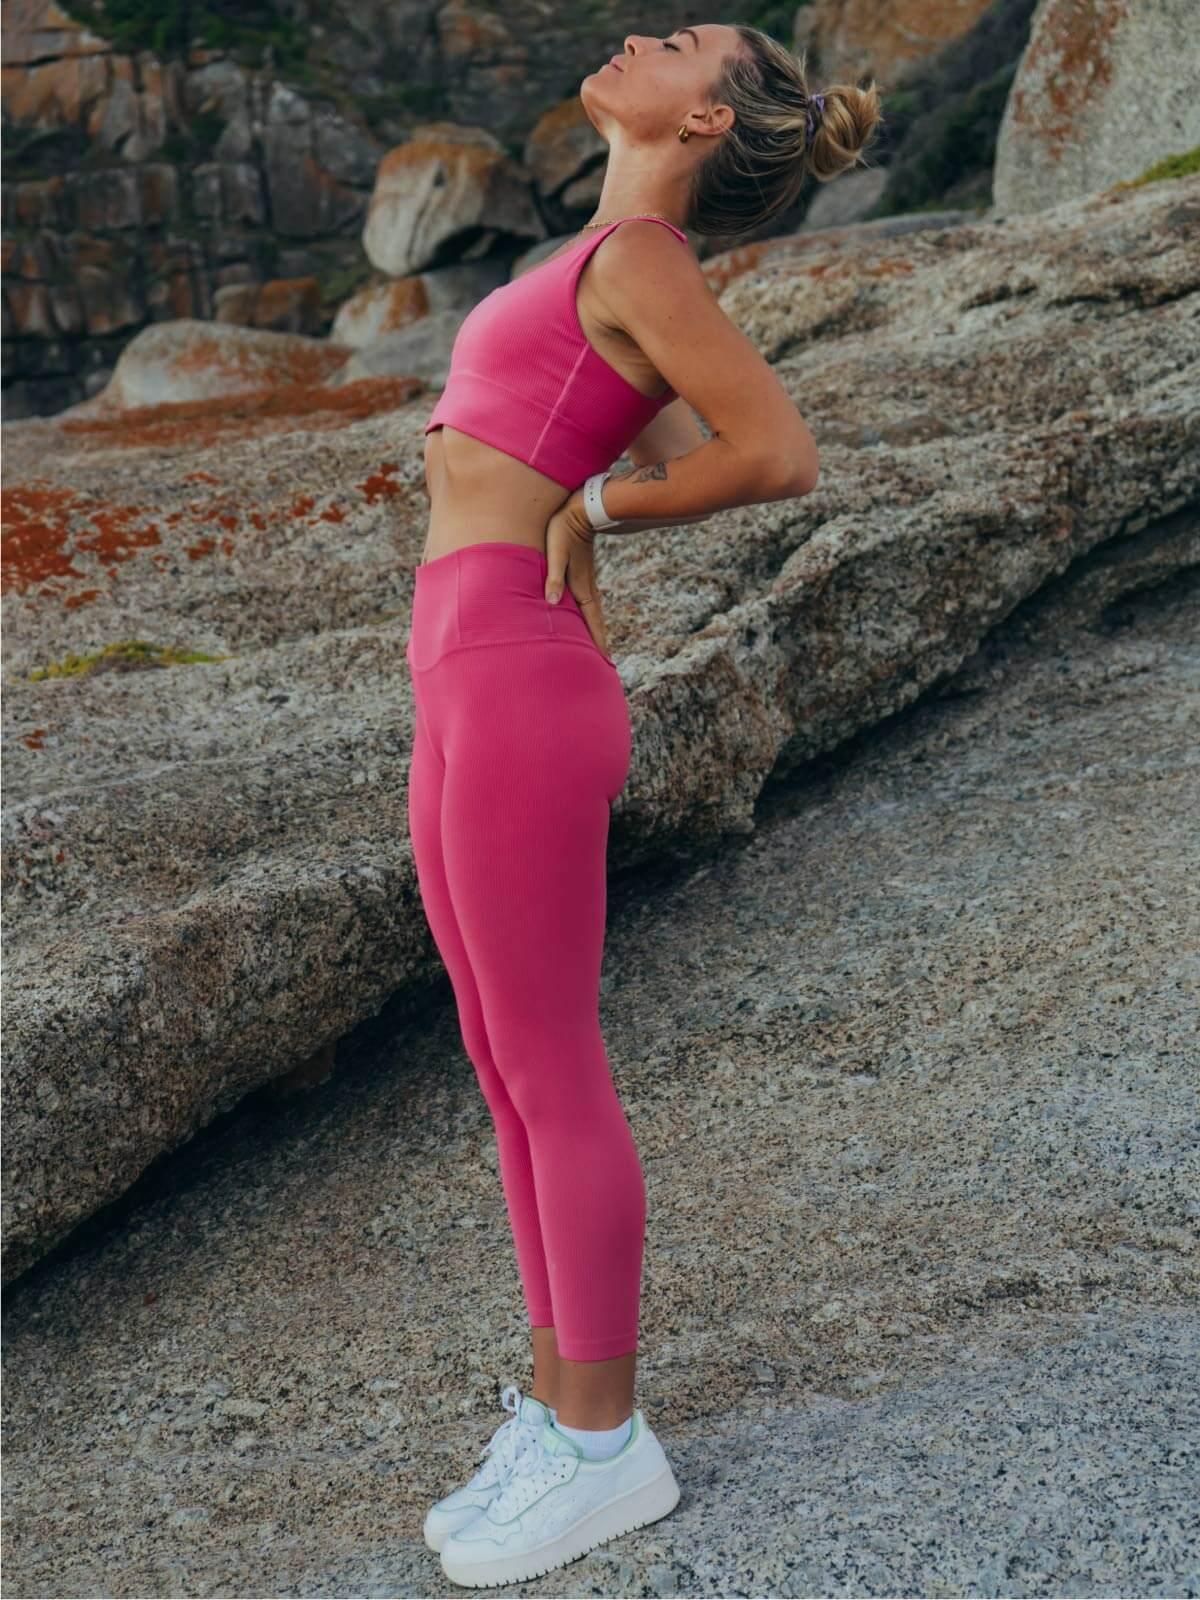 Animal print leggings for women - Spiritgirl activewear